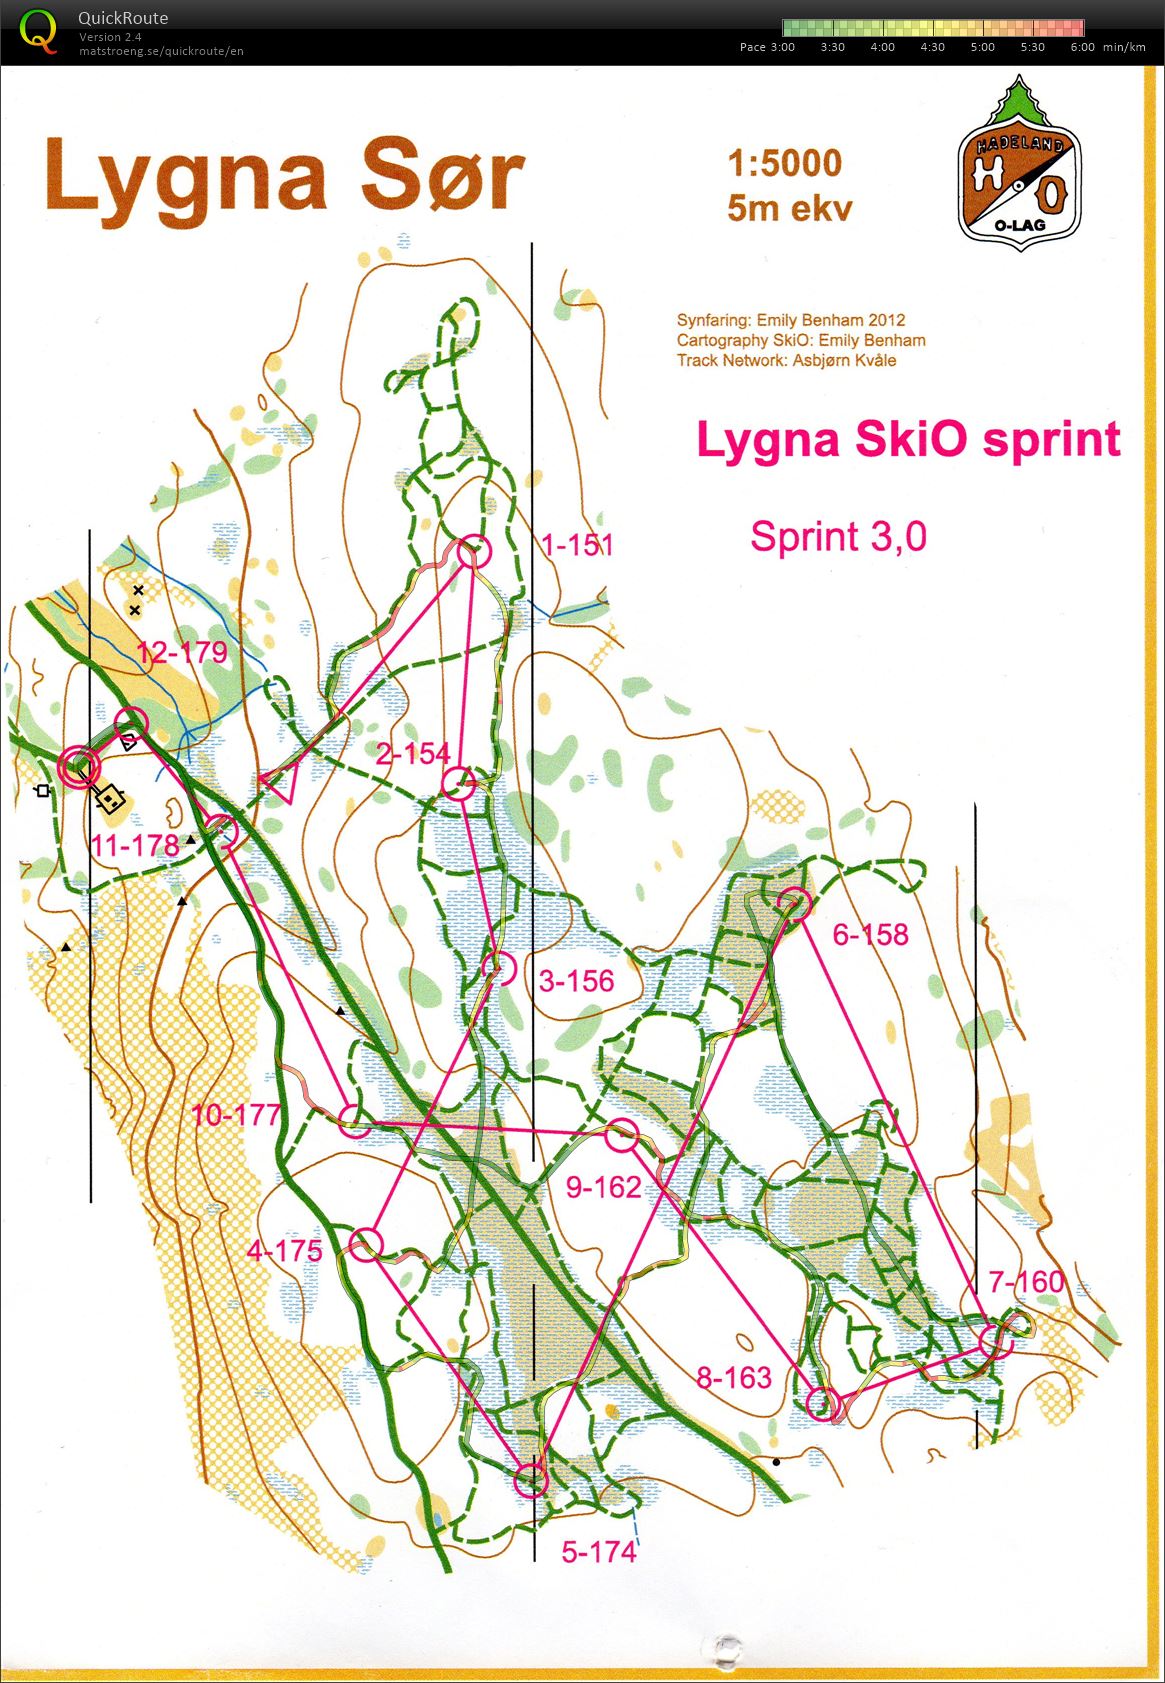 Lygna NC sr ski-o sprint (03-01-2015)